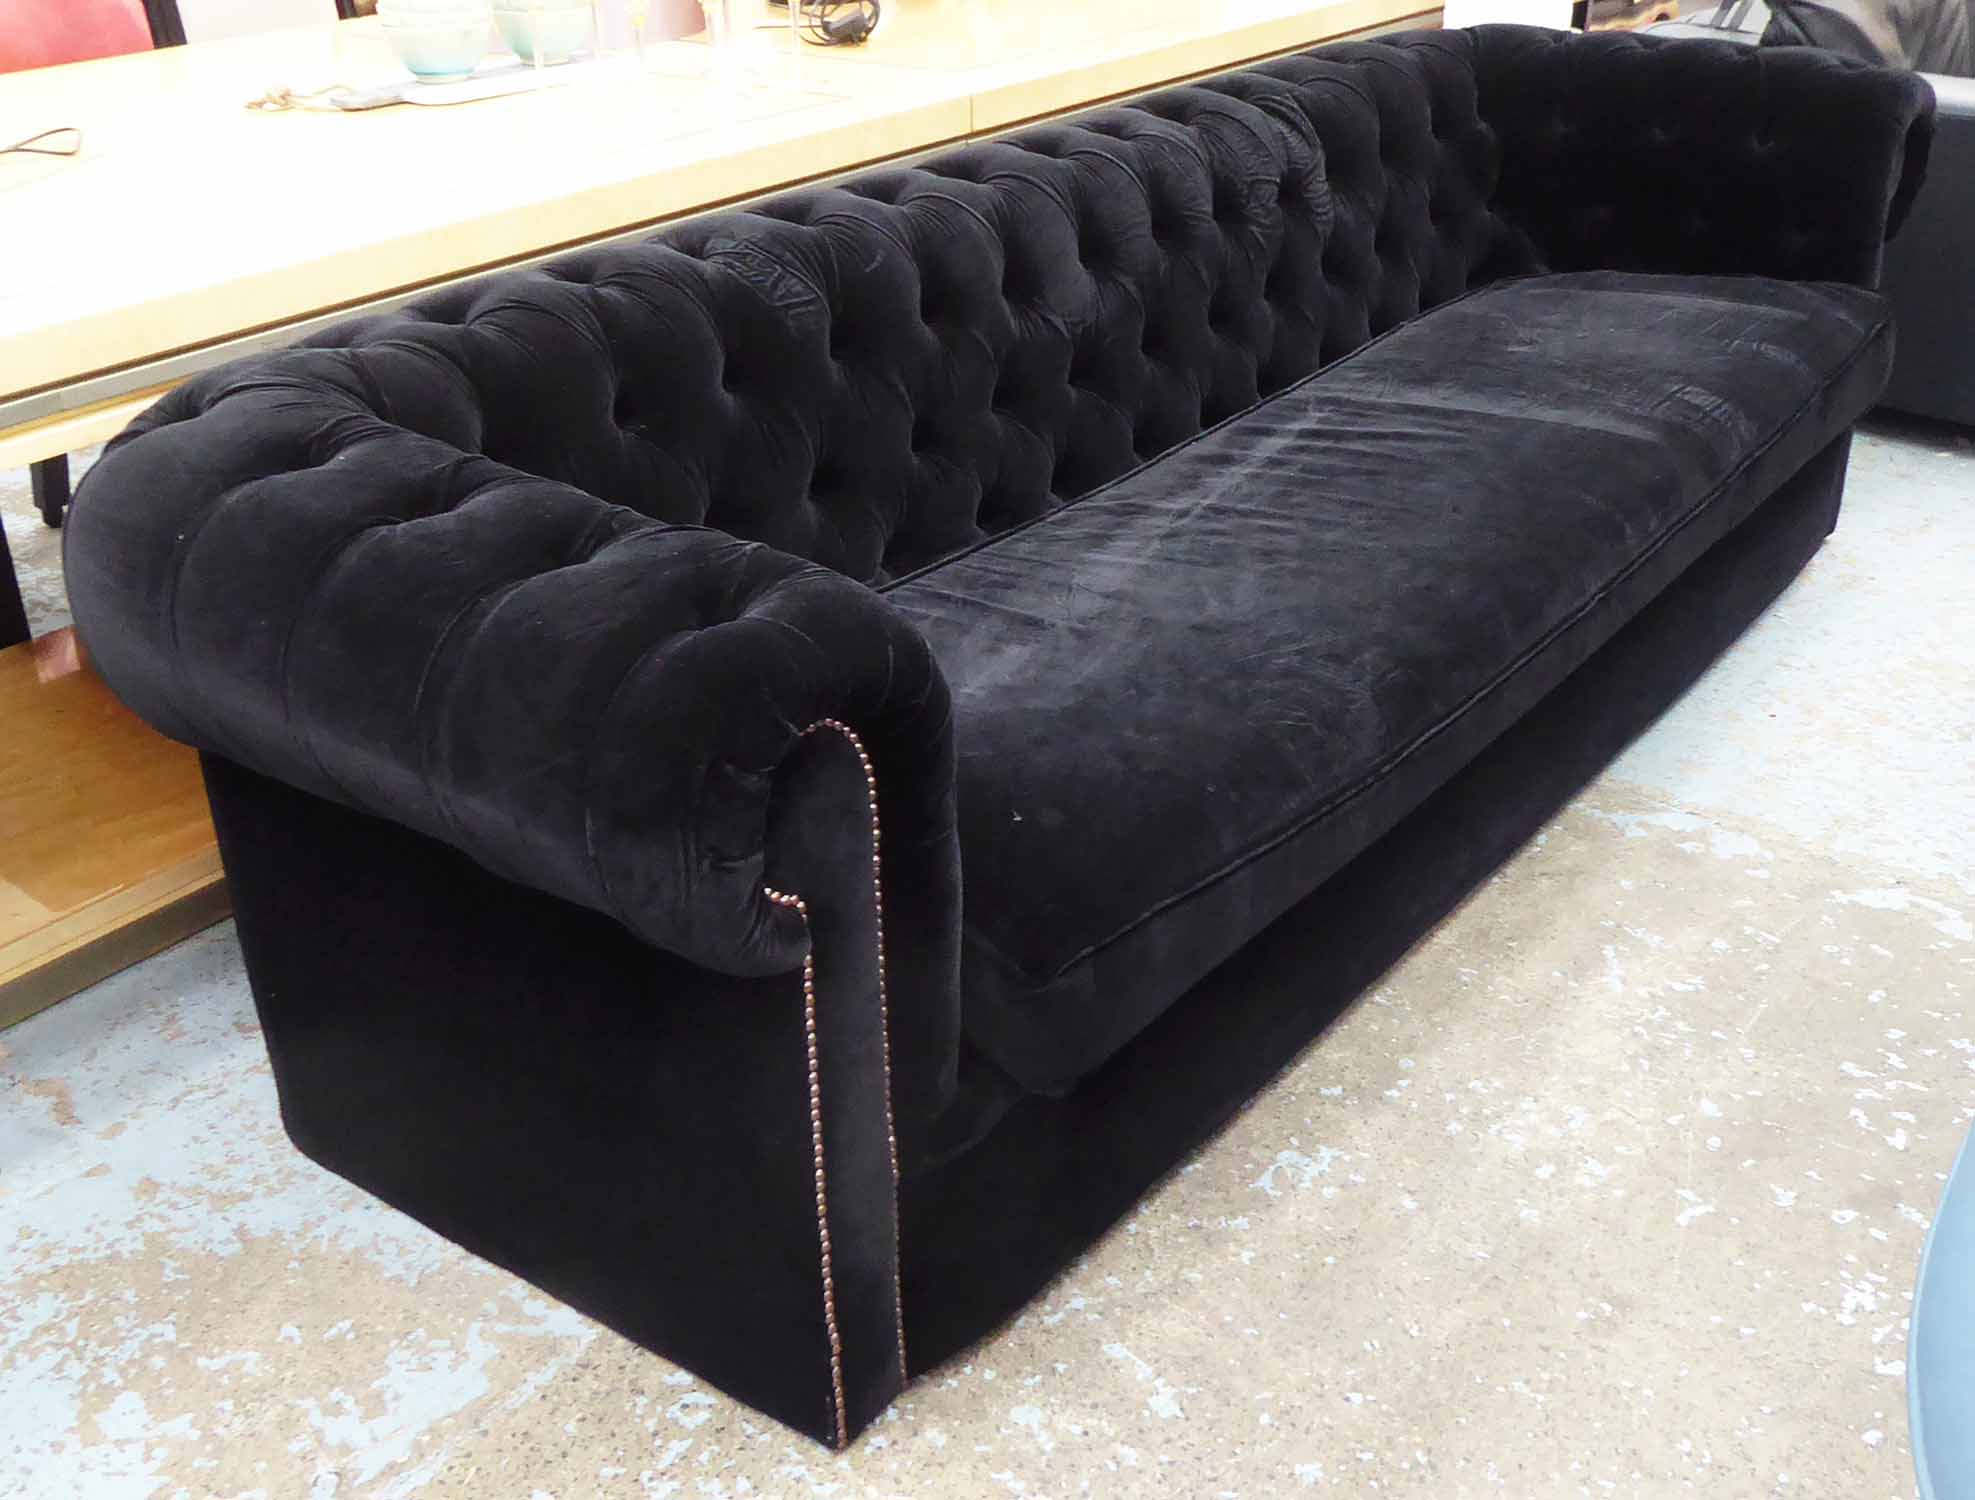 CHESTERFIELD STYLE SOFA, contemporary, black velvet finish, 250cm W.